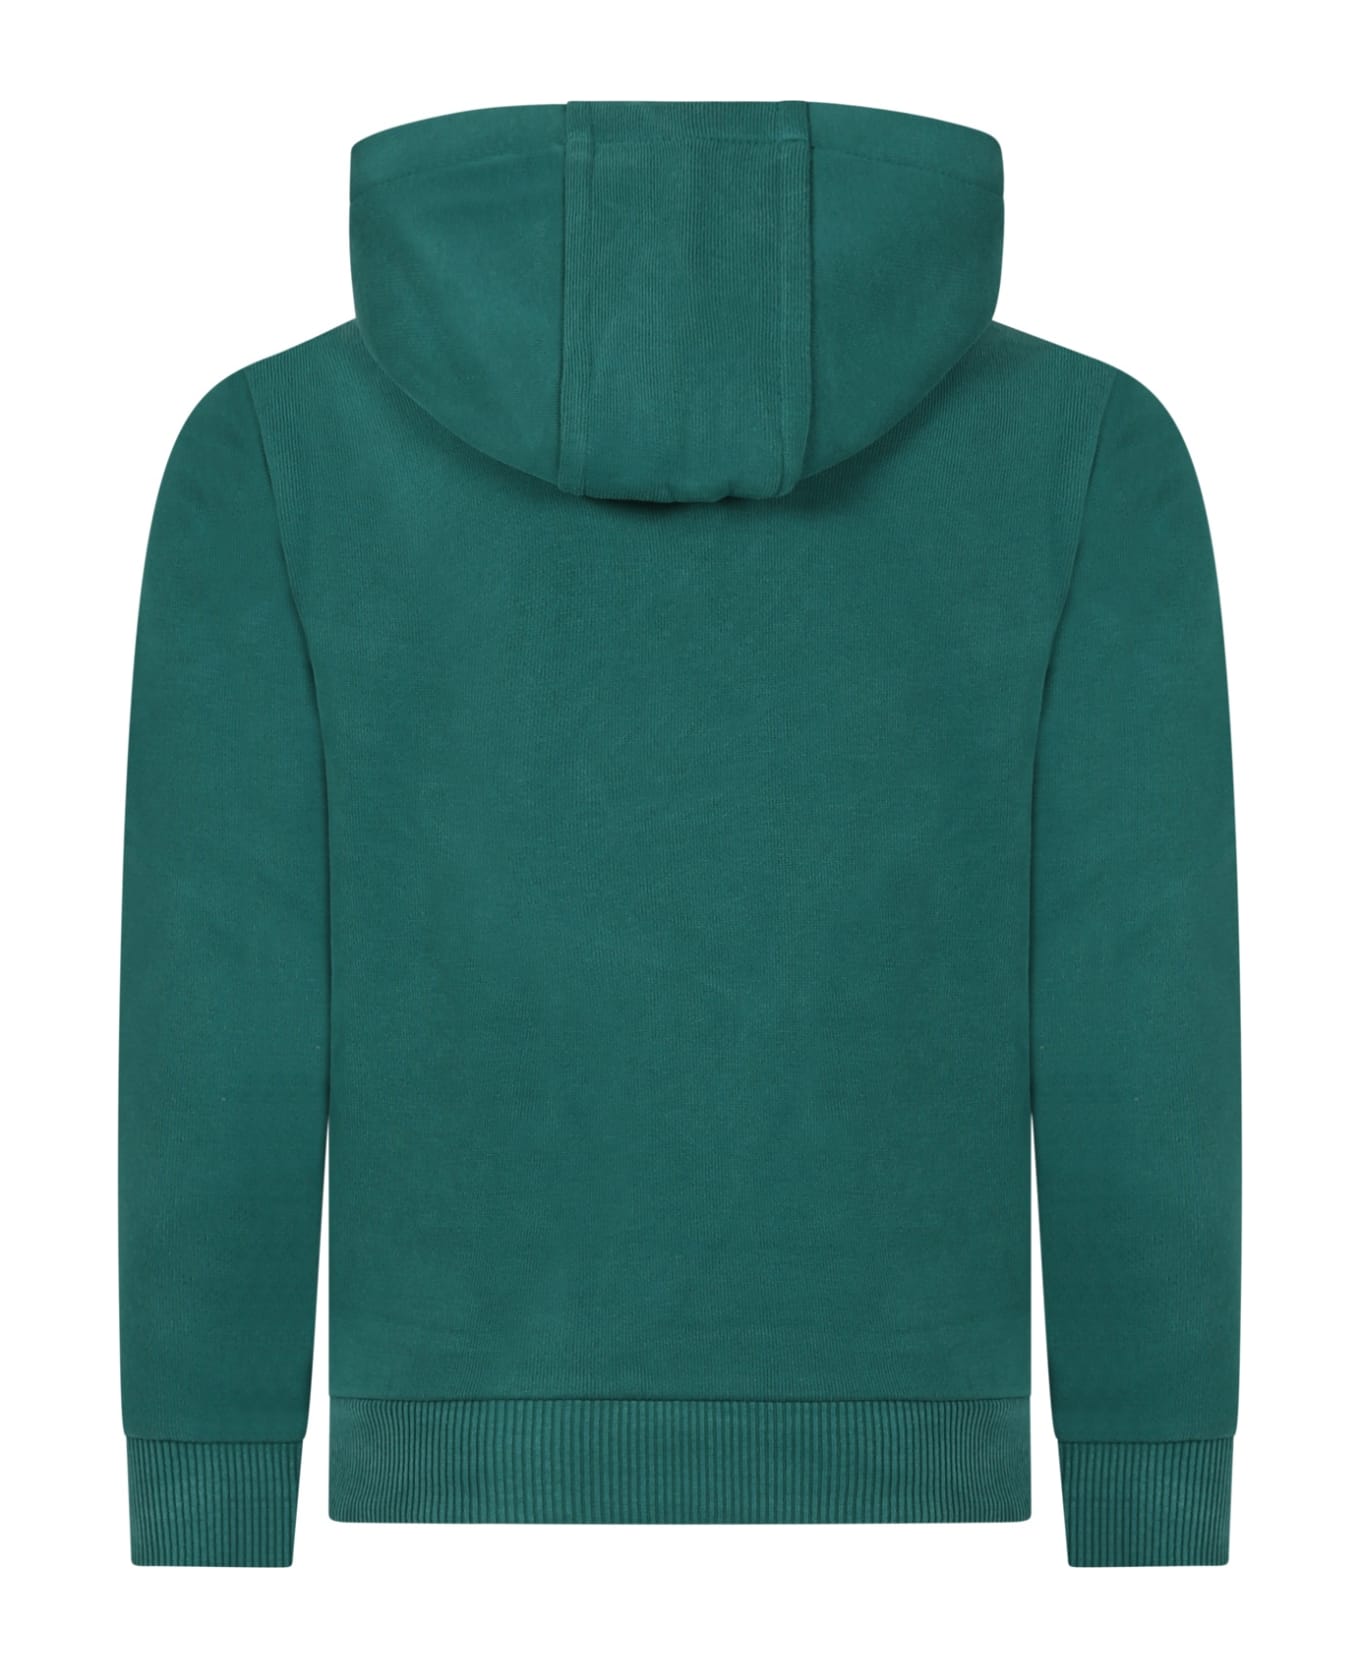 Timberland Green Sweatshirt For Boys With Logo - Green